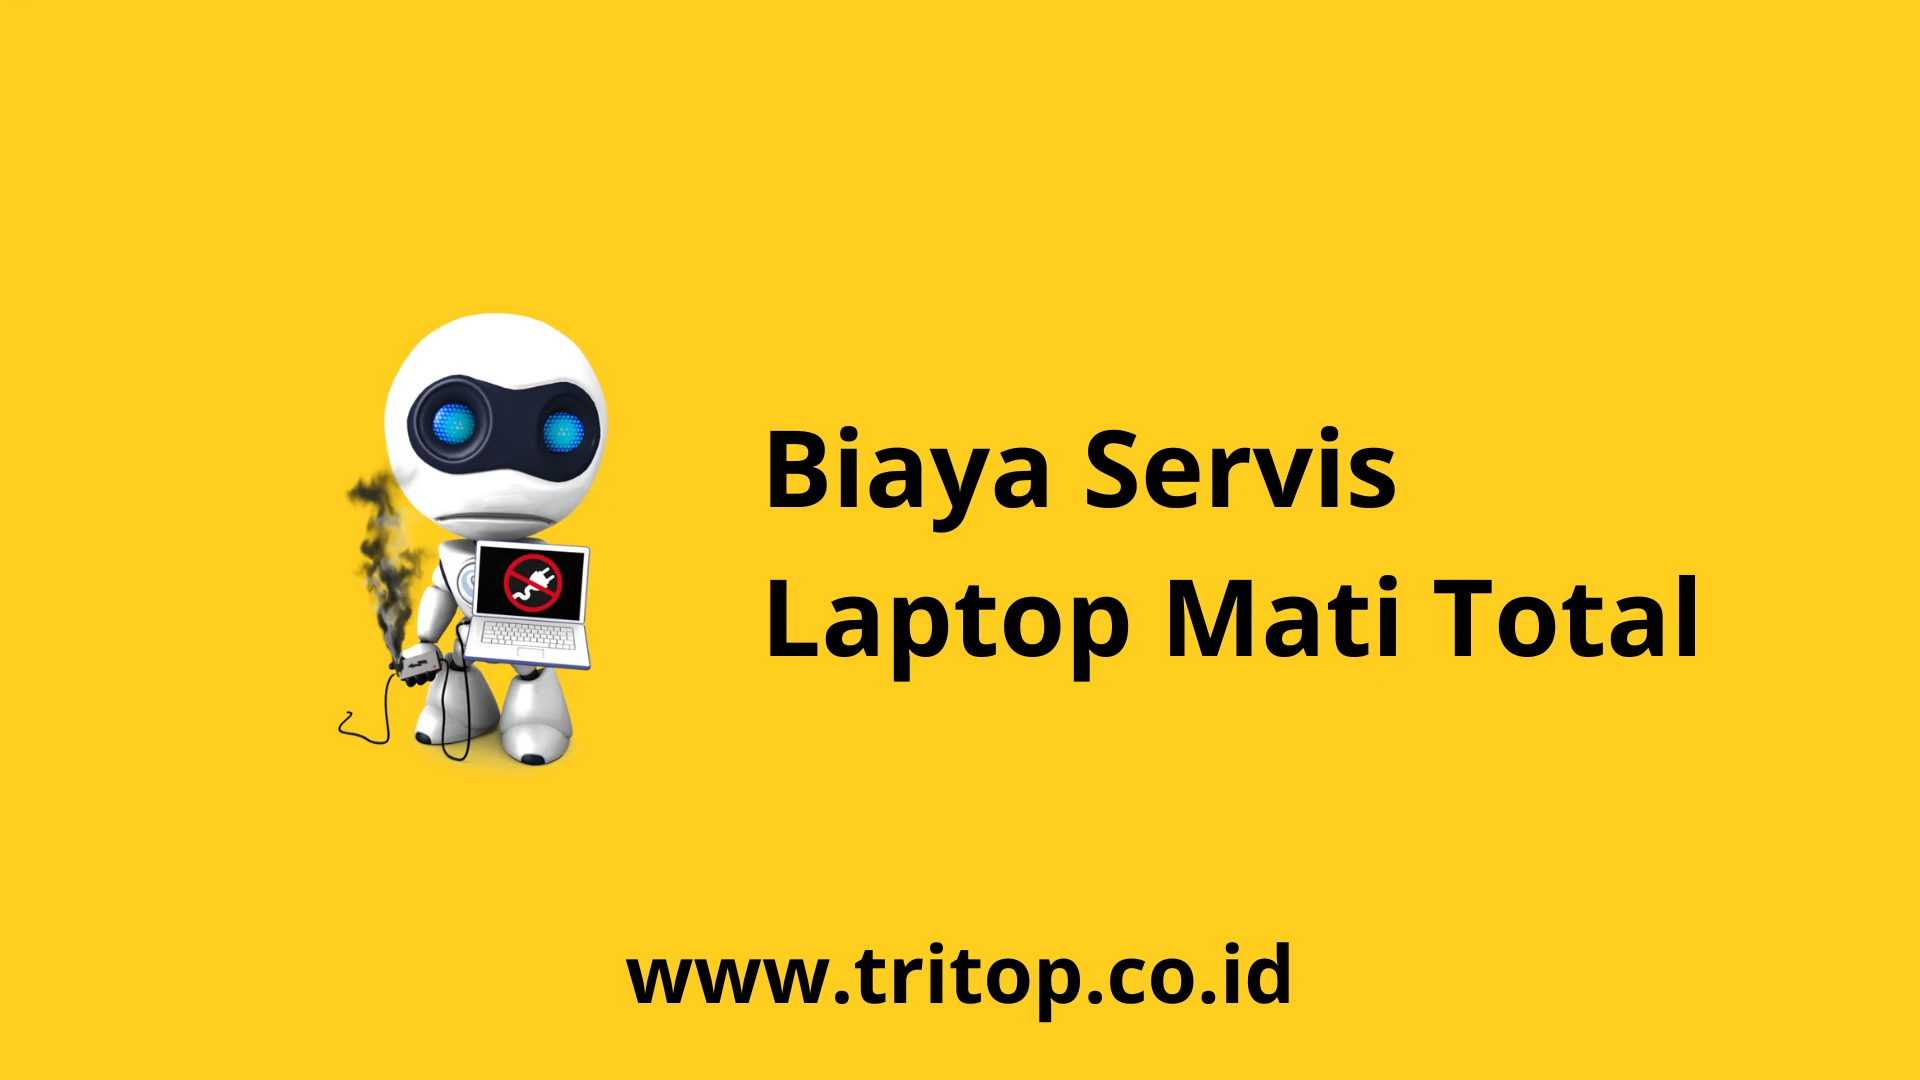 Biaya Servis Laptop Mati Total Tritop.co.id